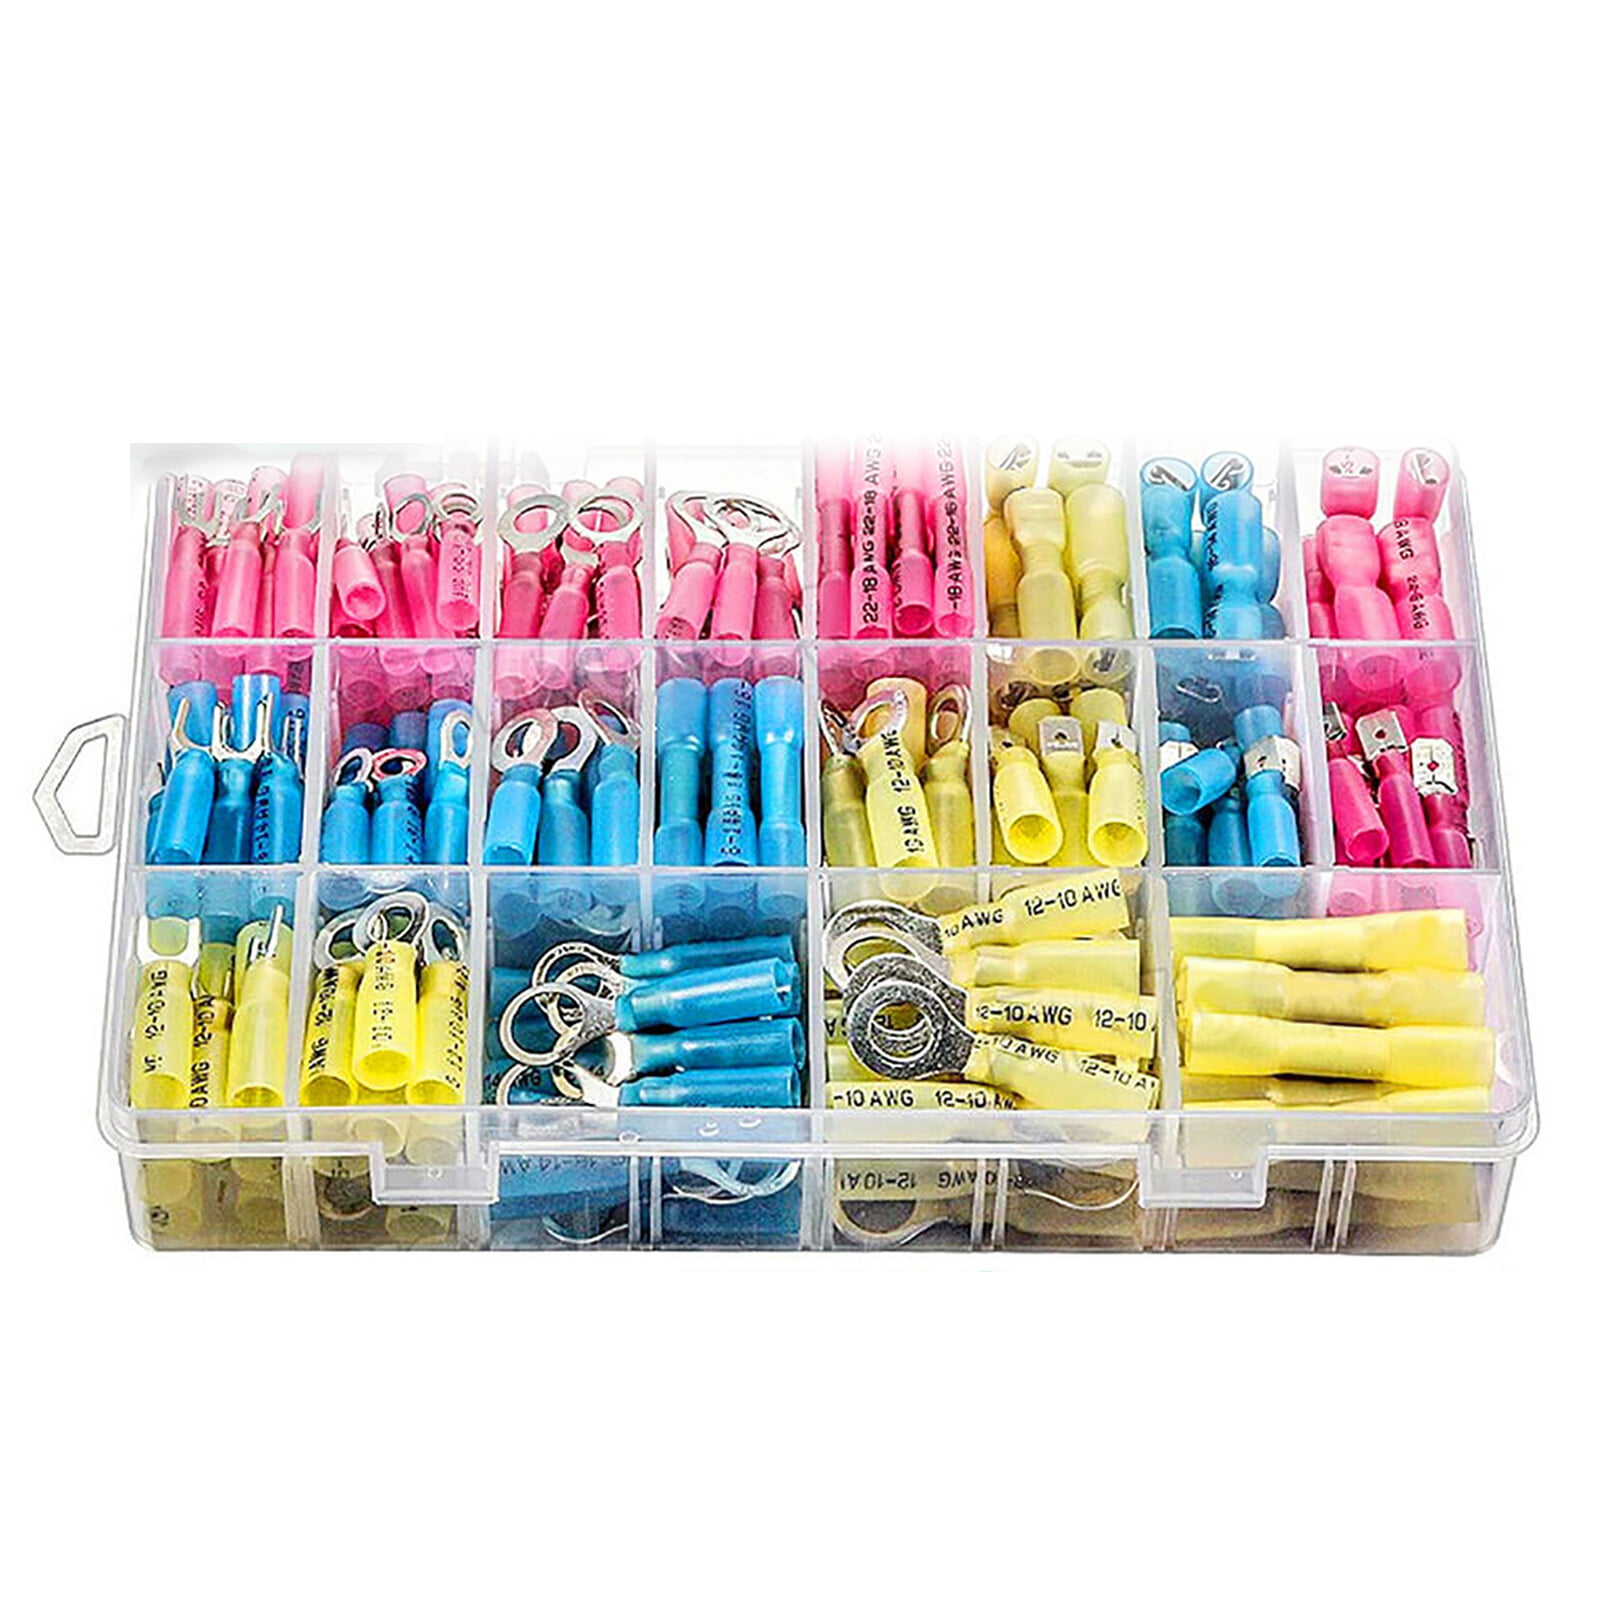 280PCS Marine Grade Heat Shrink Wire Connectors Kit, Waterproof Wire  Connectors